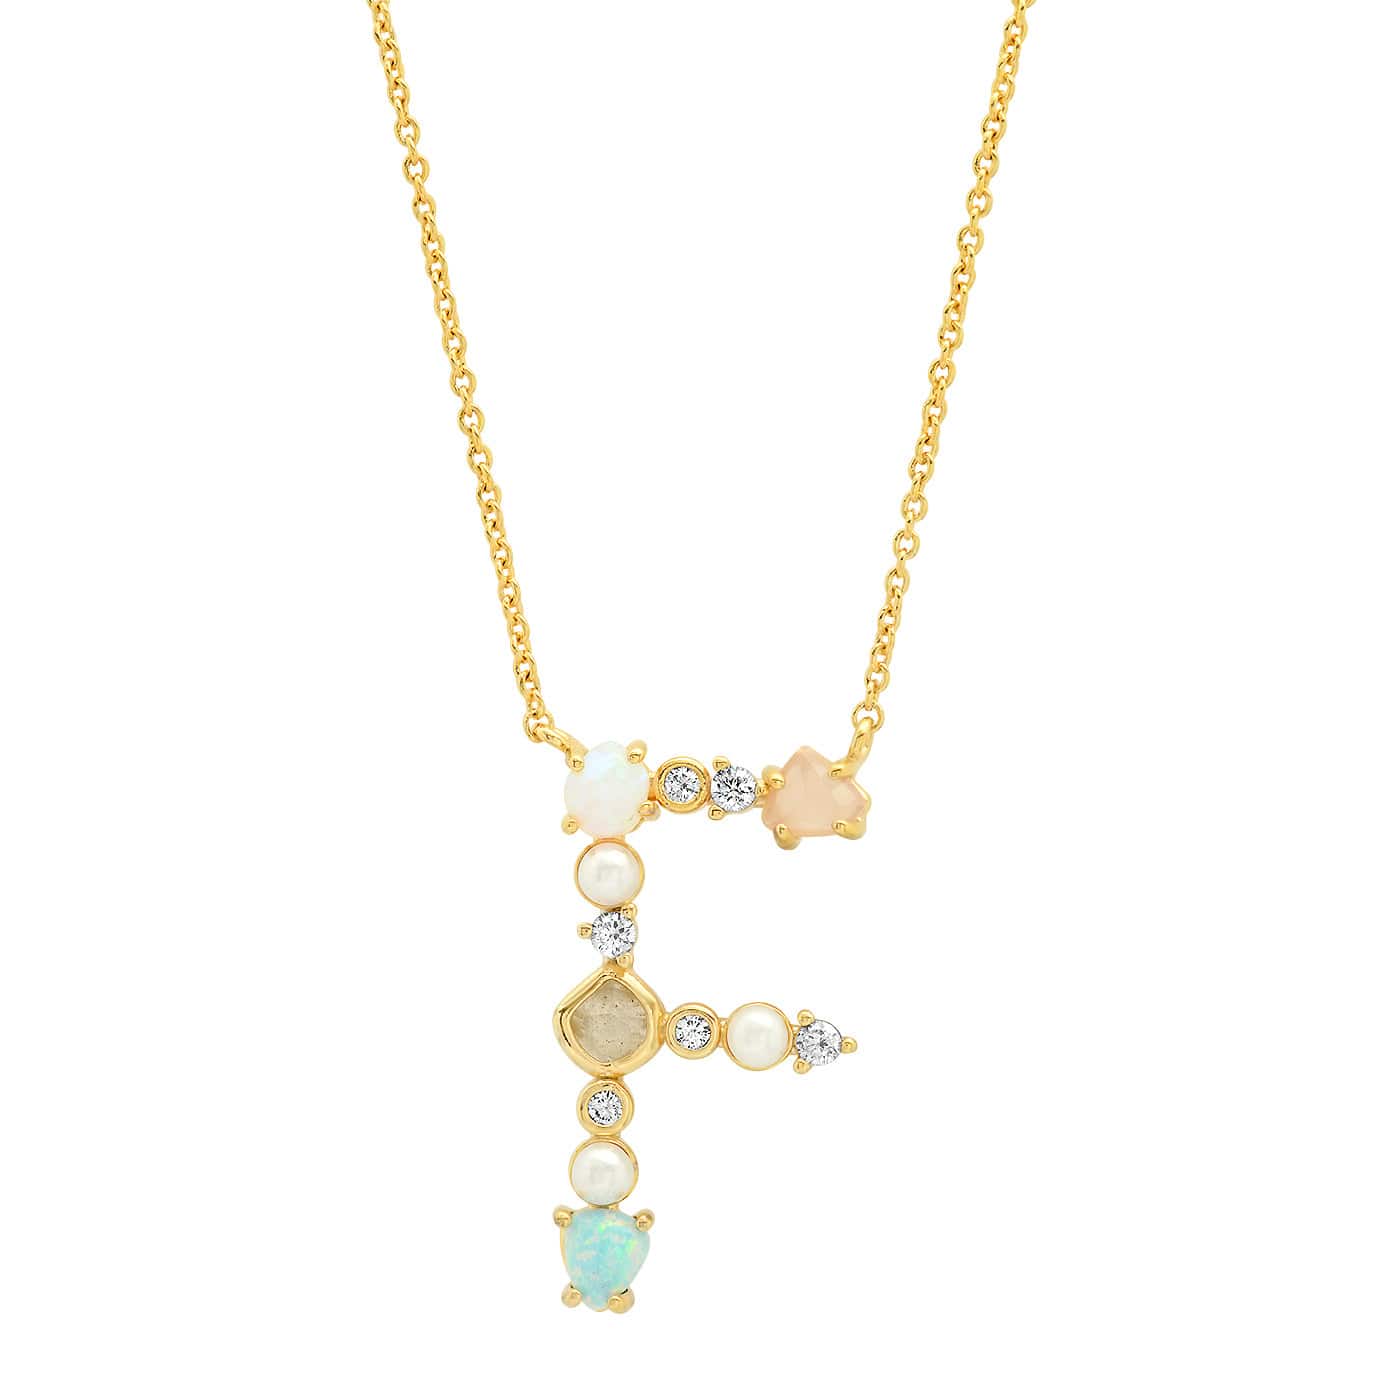 TAI JEWELRY Necklace F Opal Stone Monogram Necklace